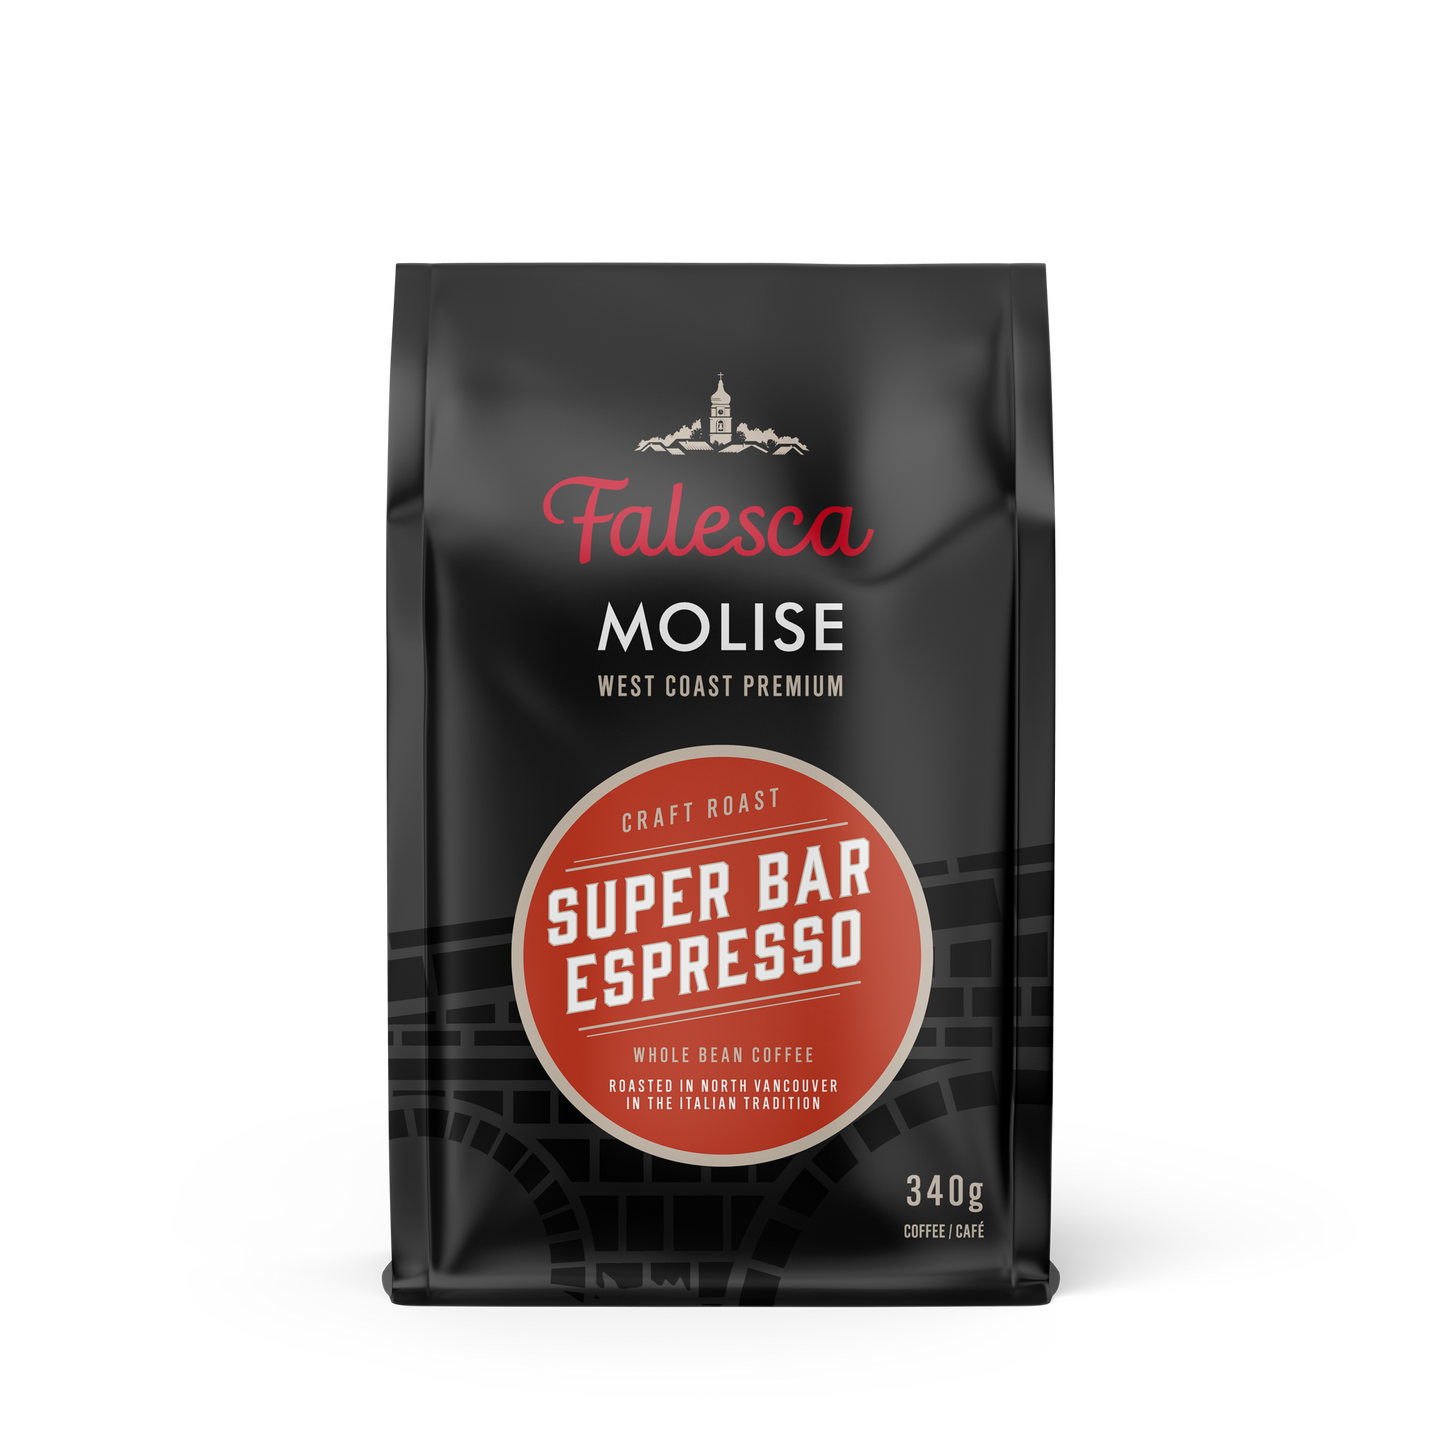 Super Bar Espresso